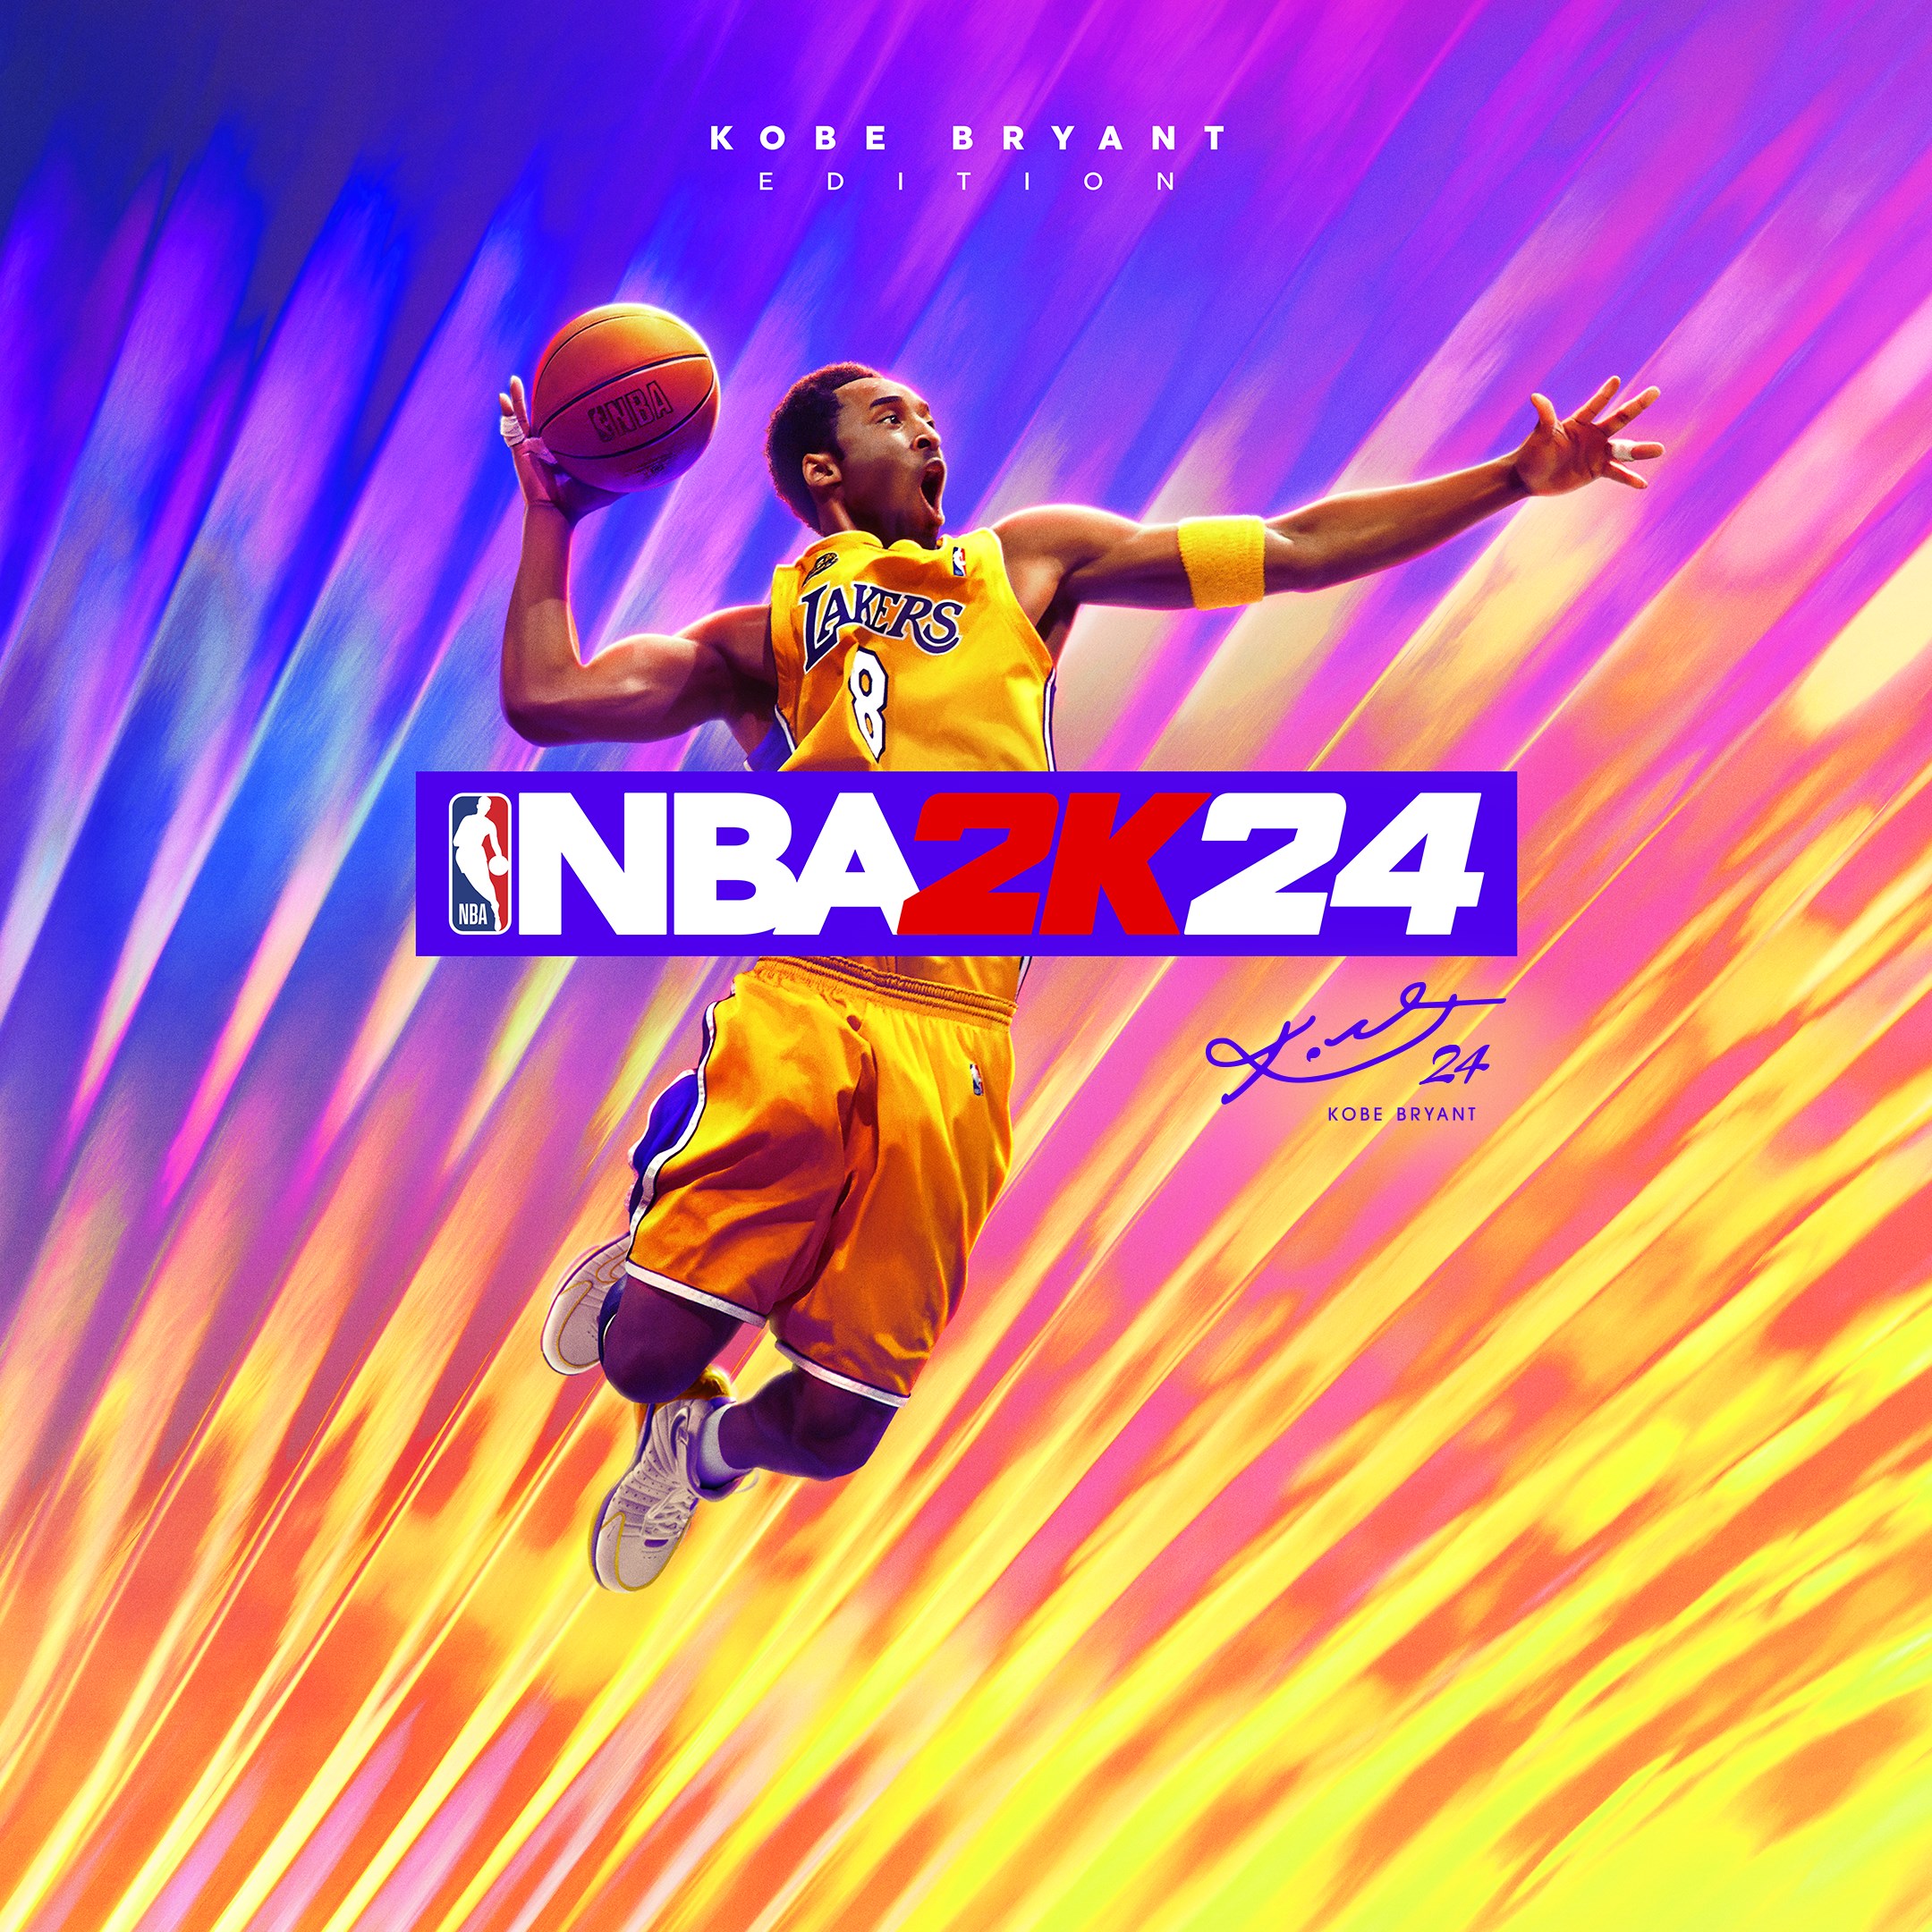 NBA 2K24 on Xbox Series X|S